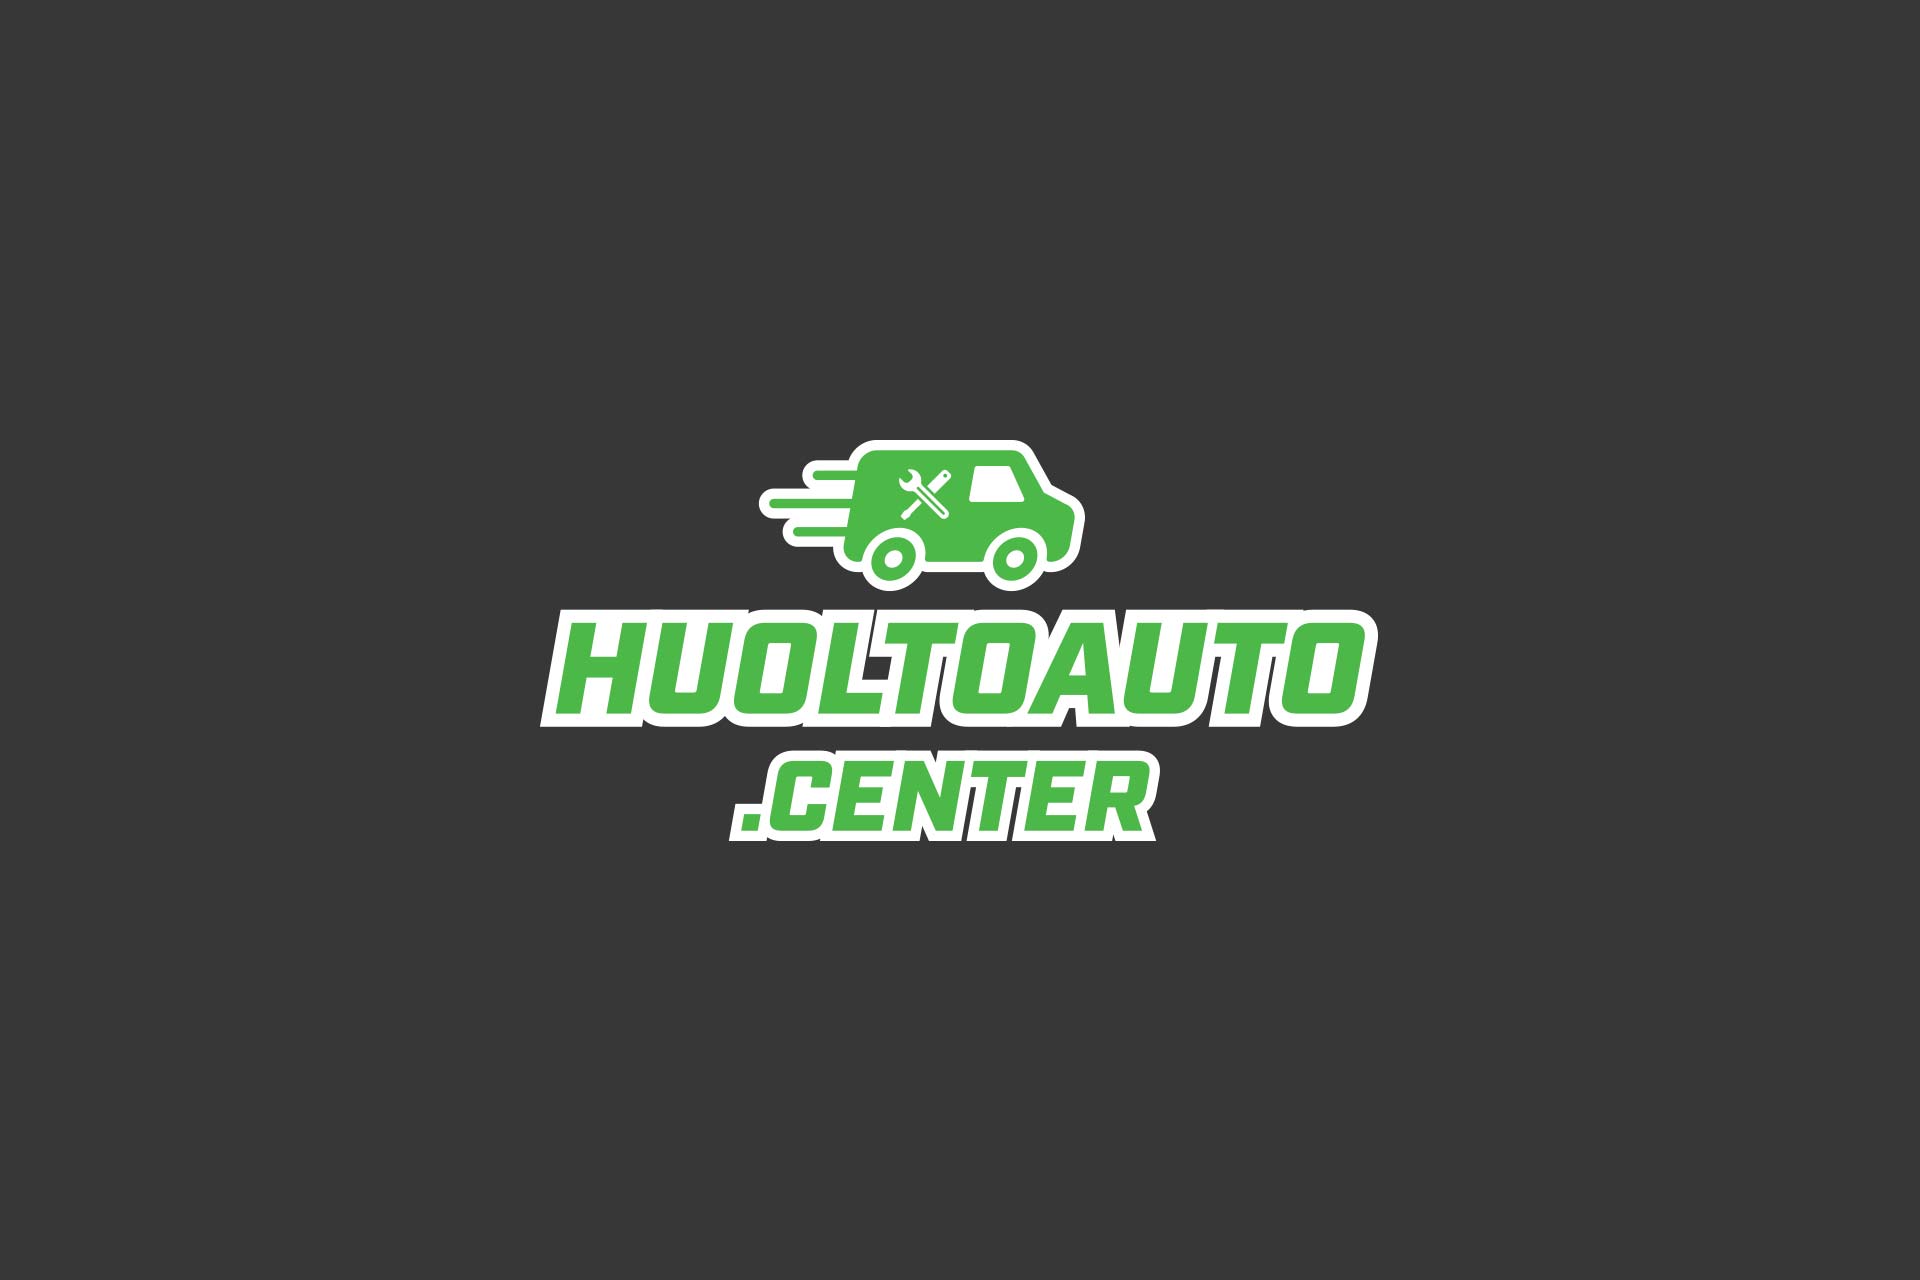 Huoltoauto Center logo